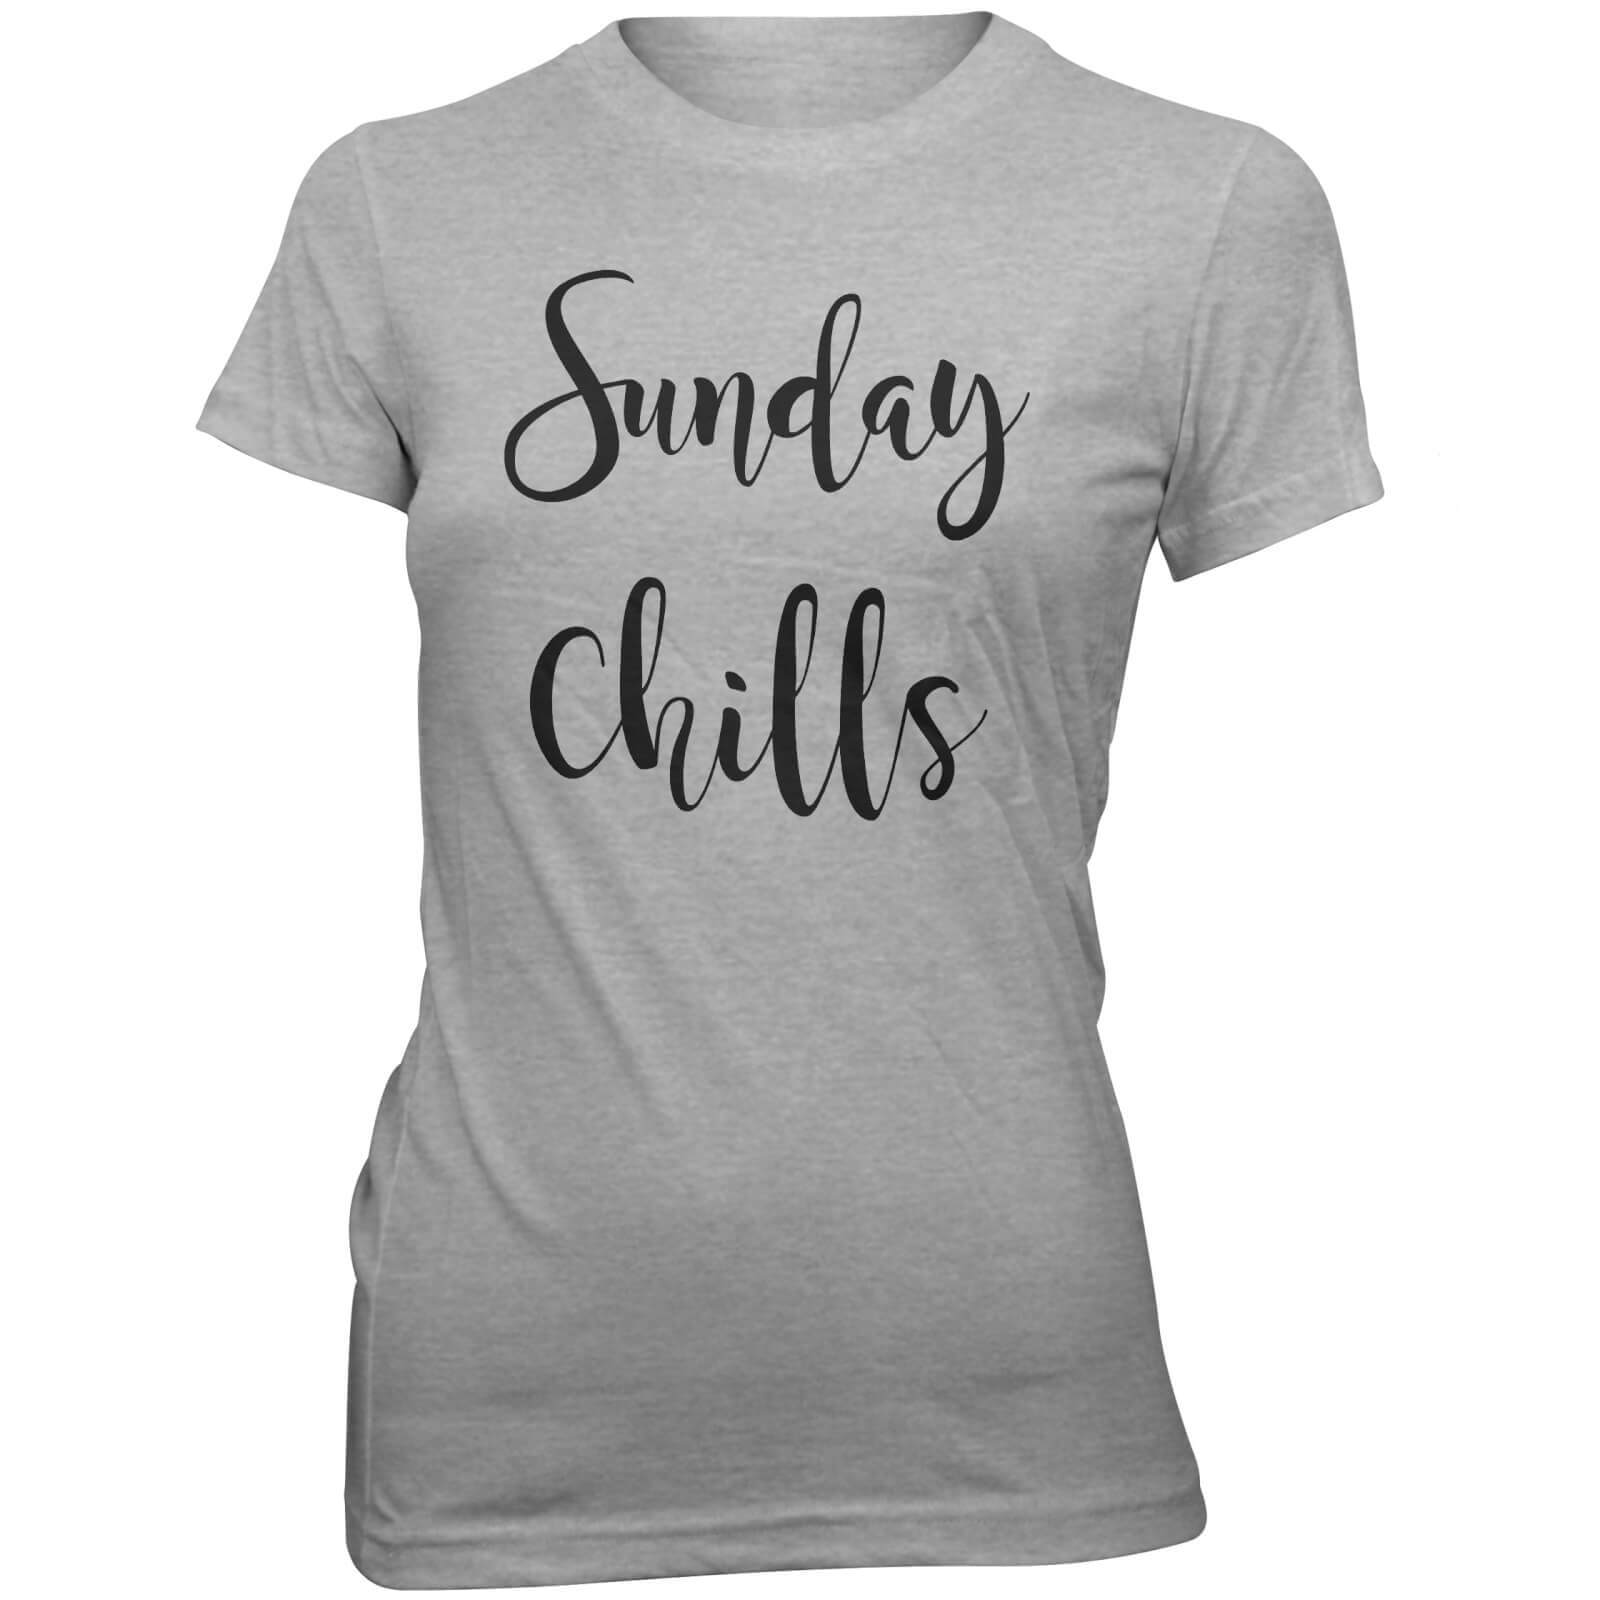 Sunday Chills Women's Slogan T-Shirt - S - Grey